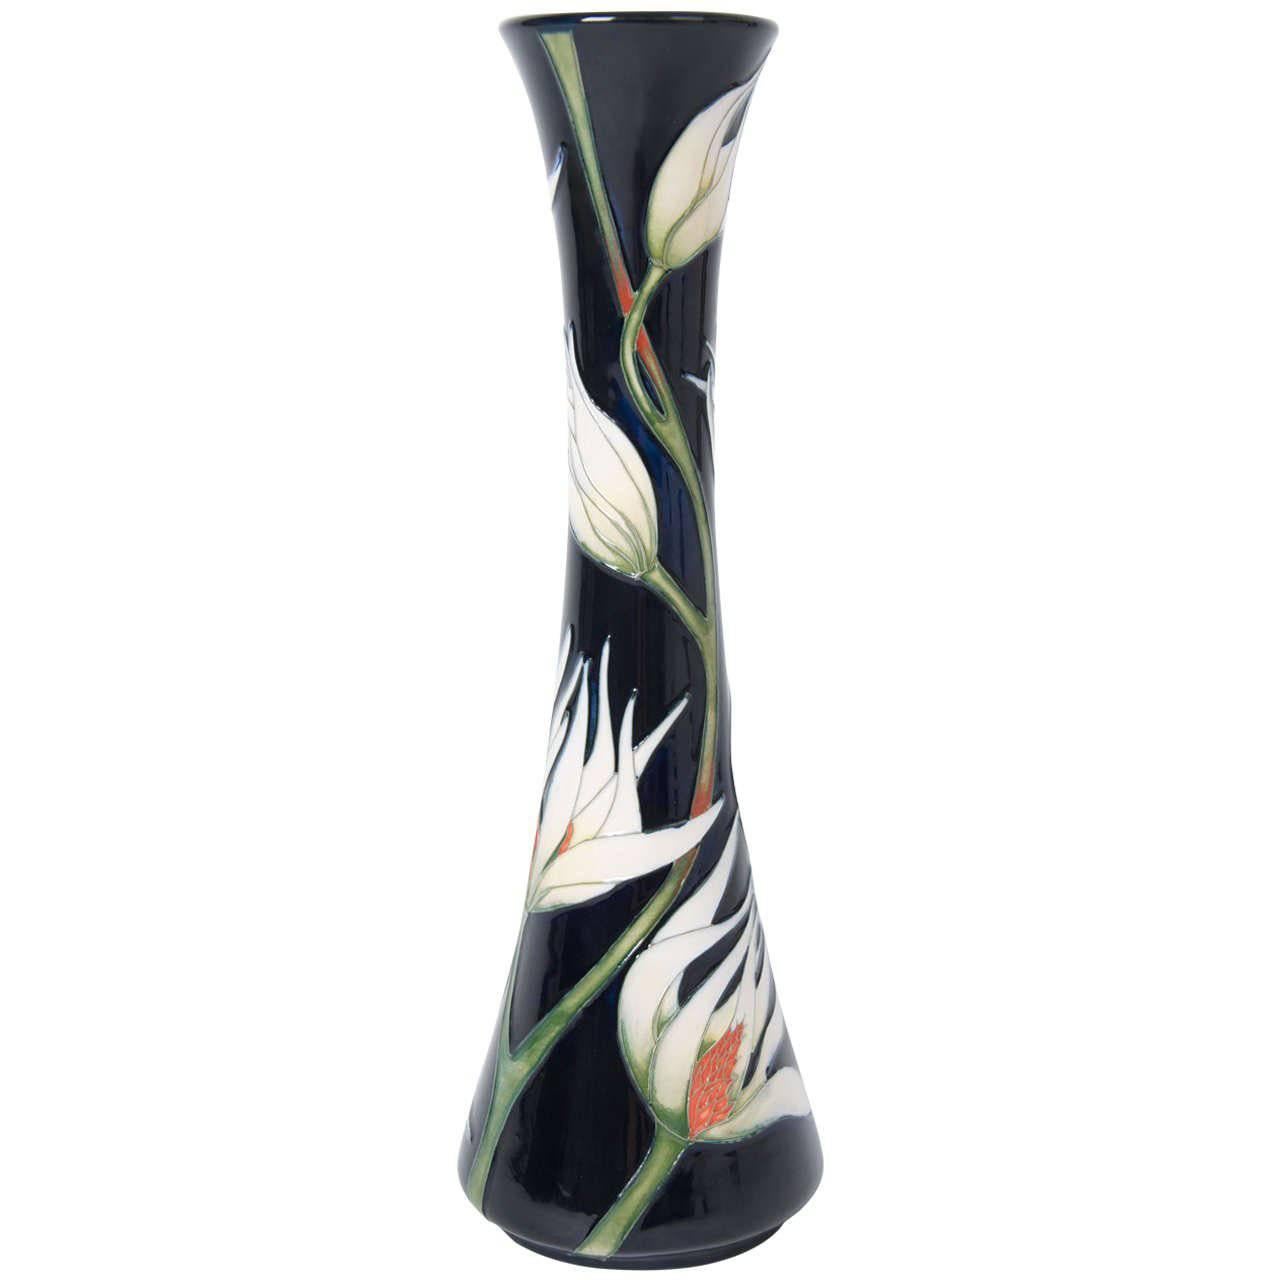 Moorcroft Pottery Vase by Samantha Johnson in White Lily Pattern, 2004